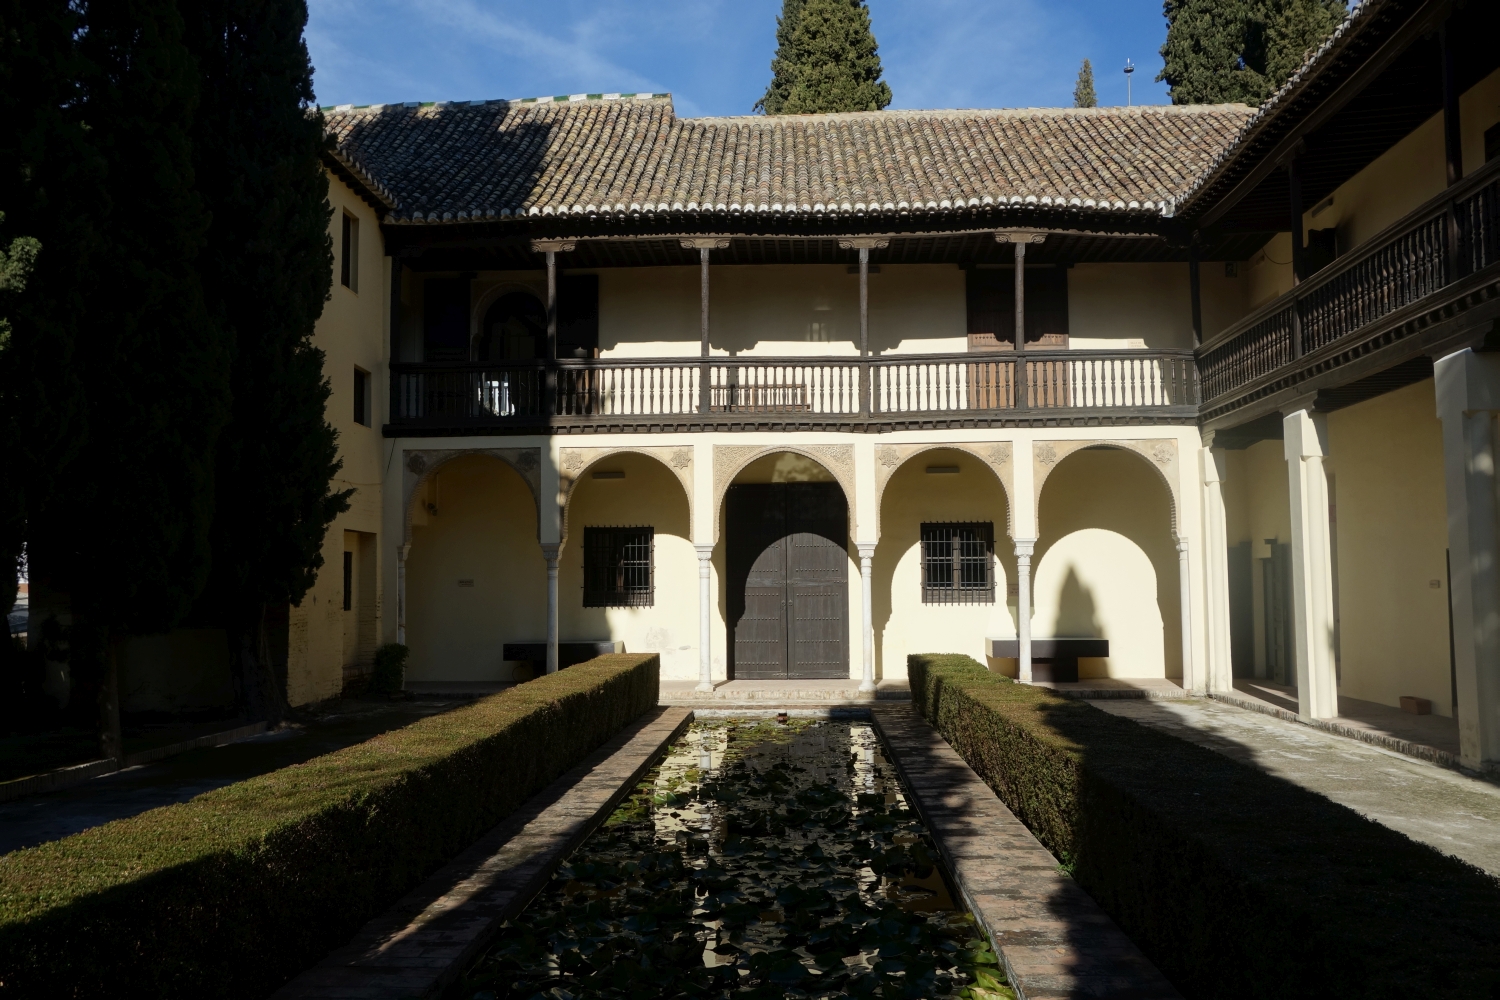 Casa de Lorenzo el Chapiz, courtyard